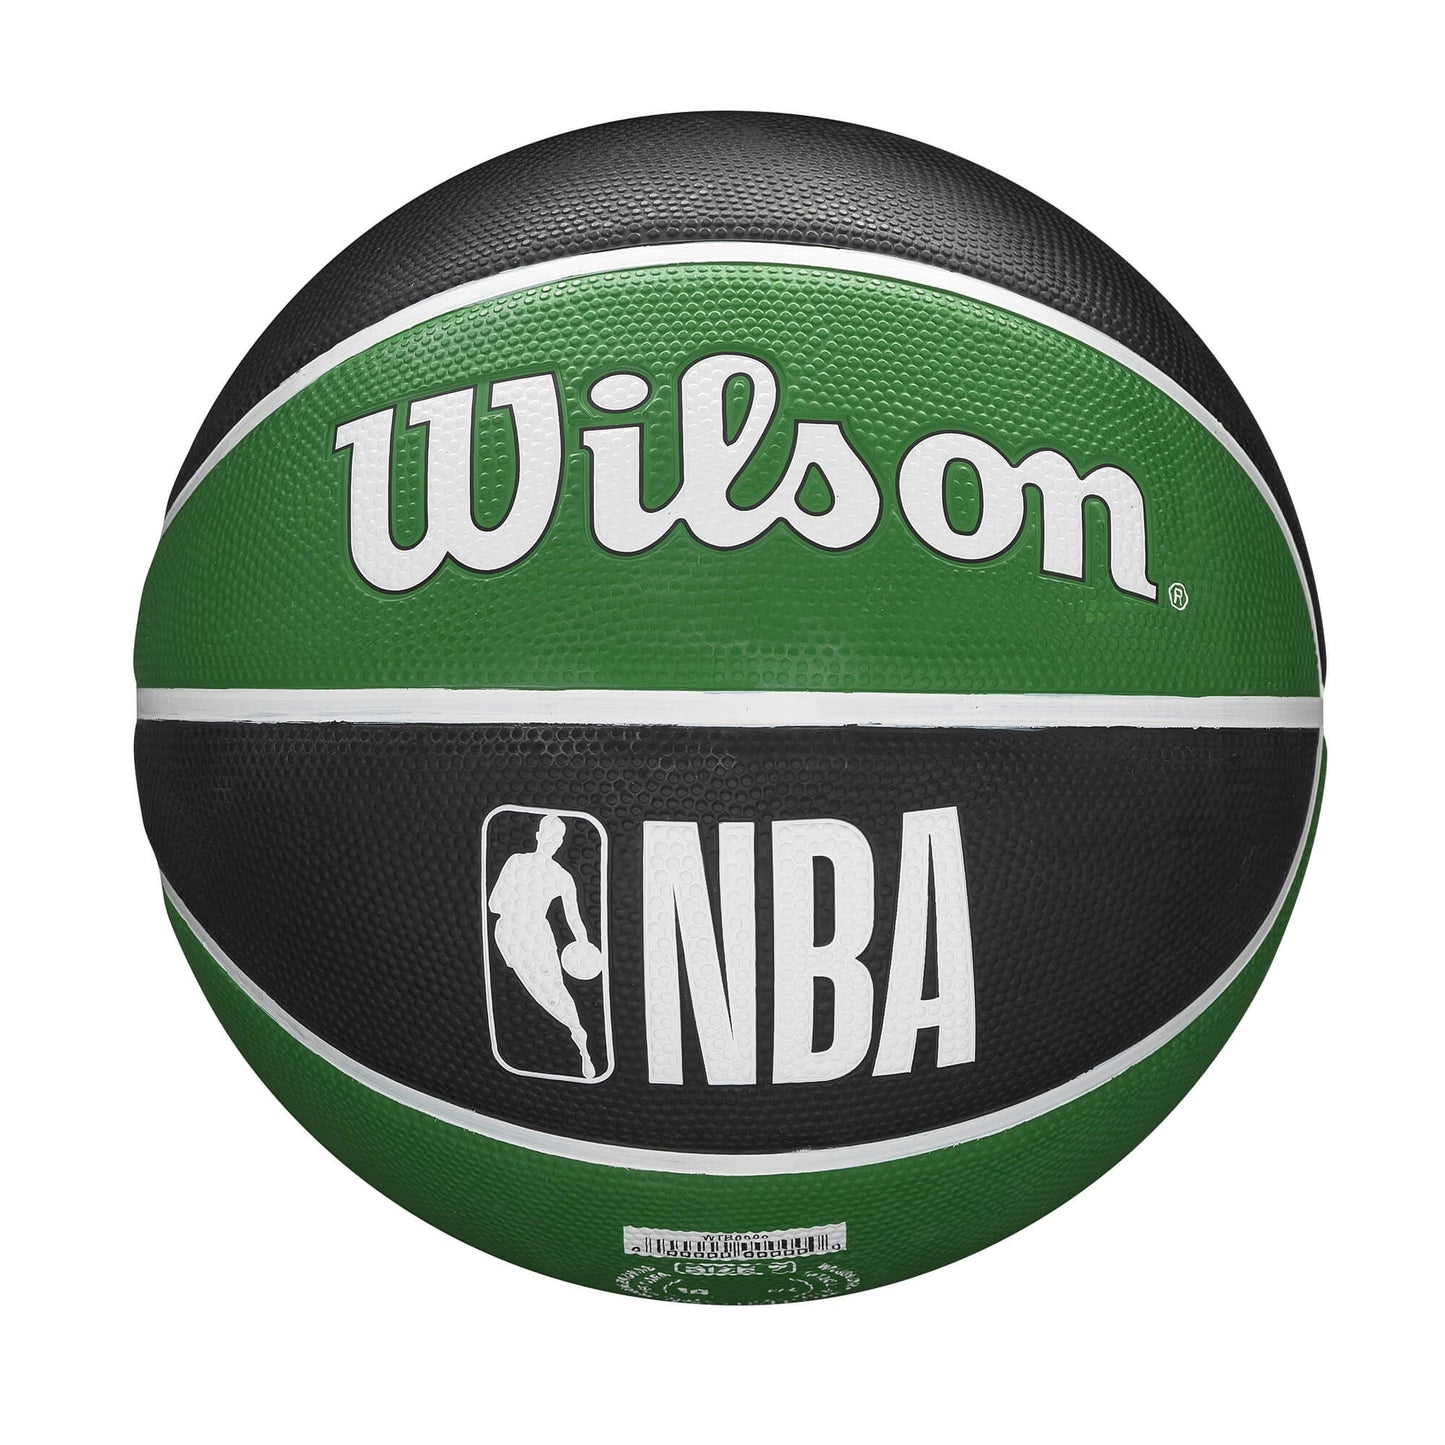 Wilson NBA Team Tribute Basketball Boston Celtics (sz. 7)